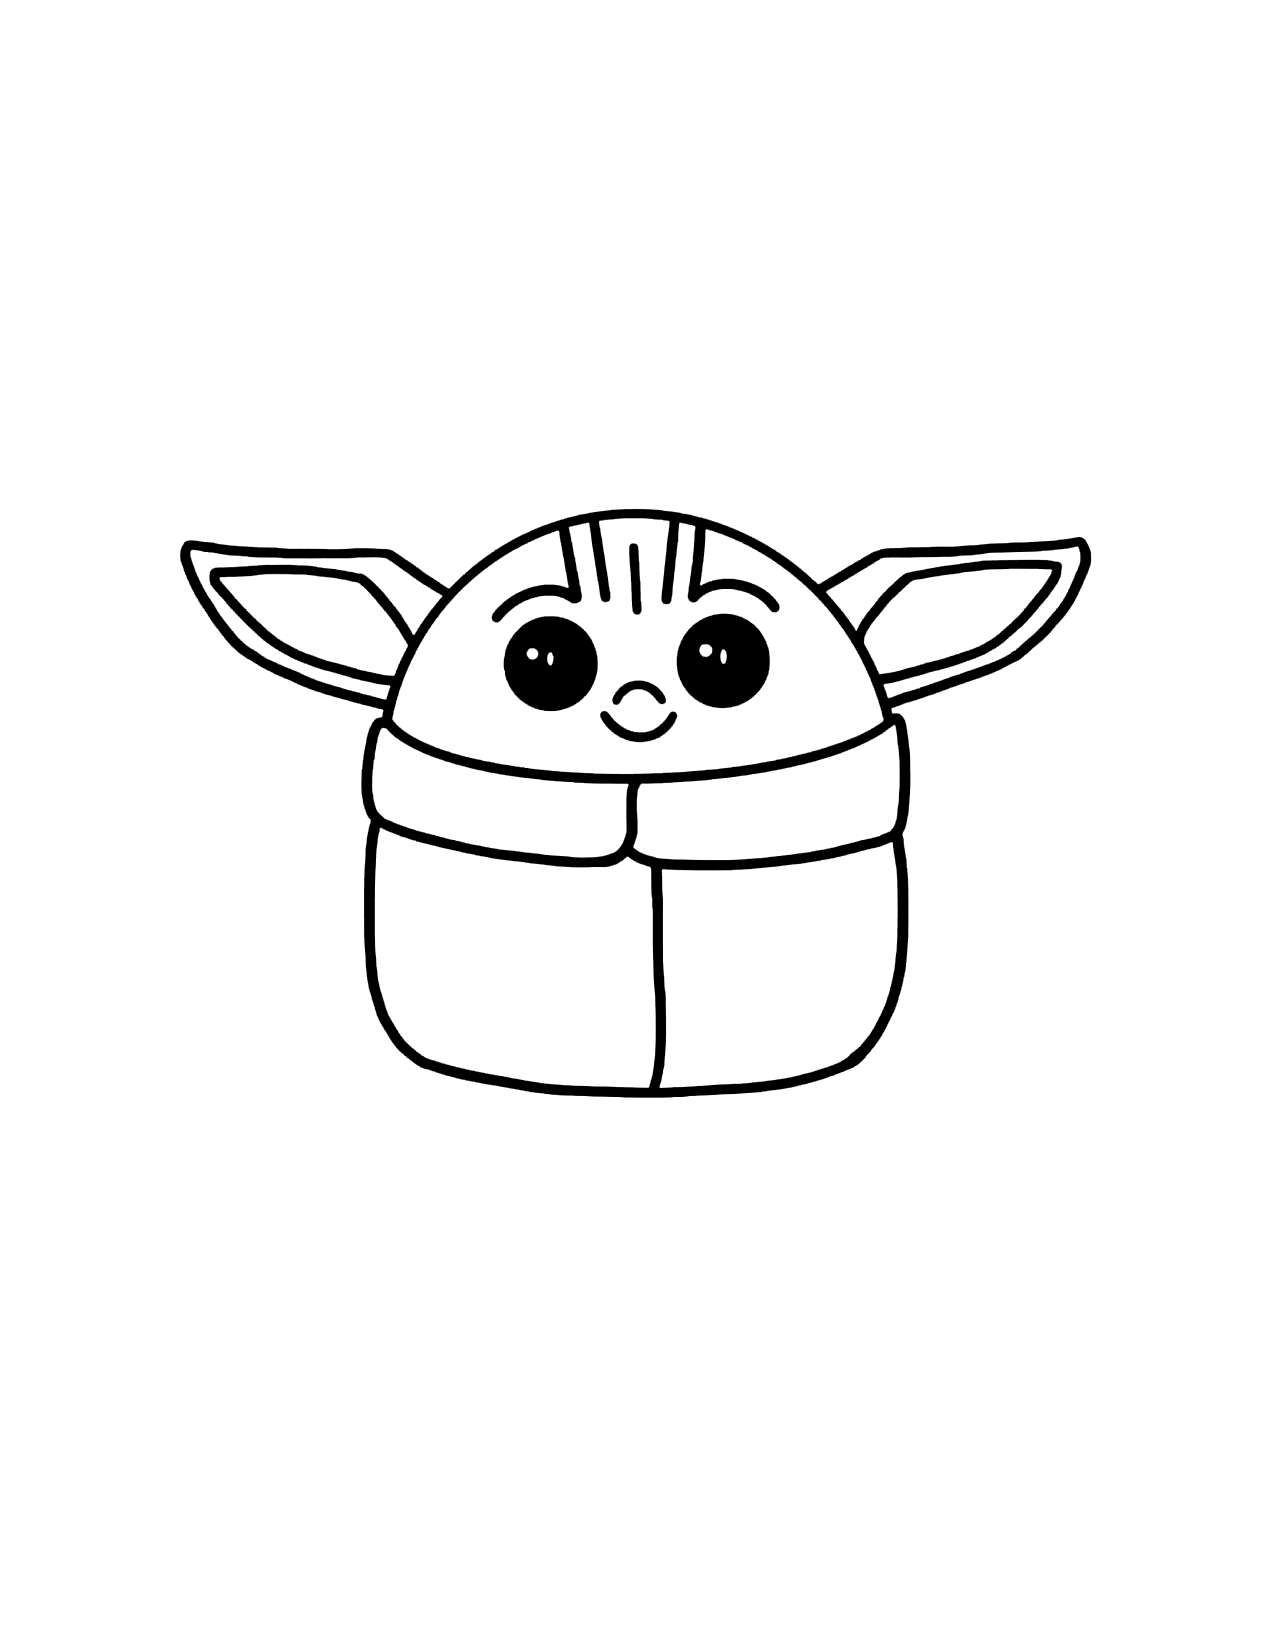 Adorable Baby Yoda Character Coloring Page